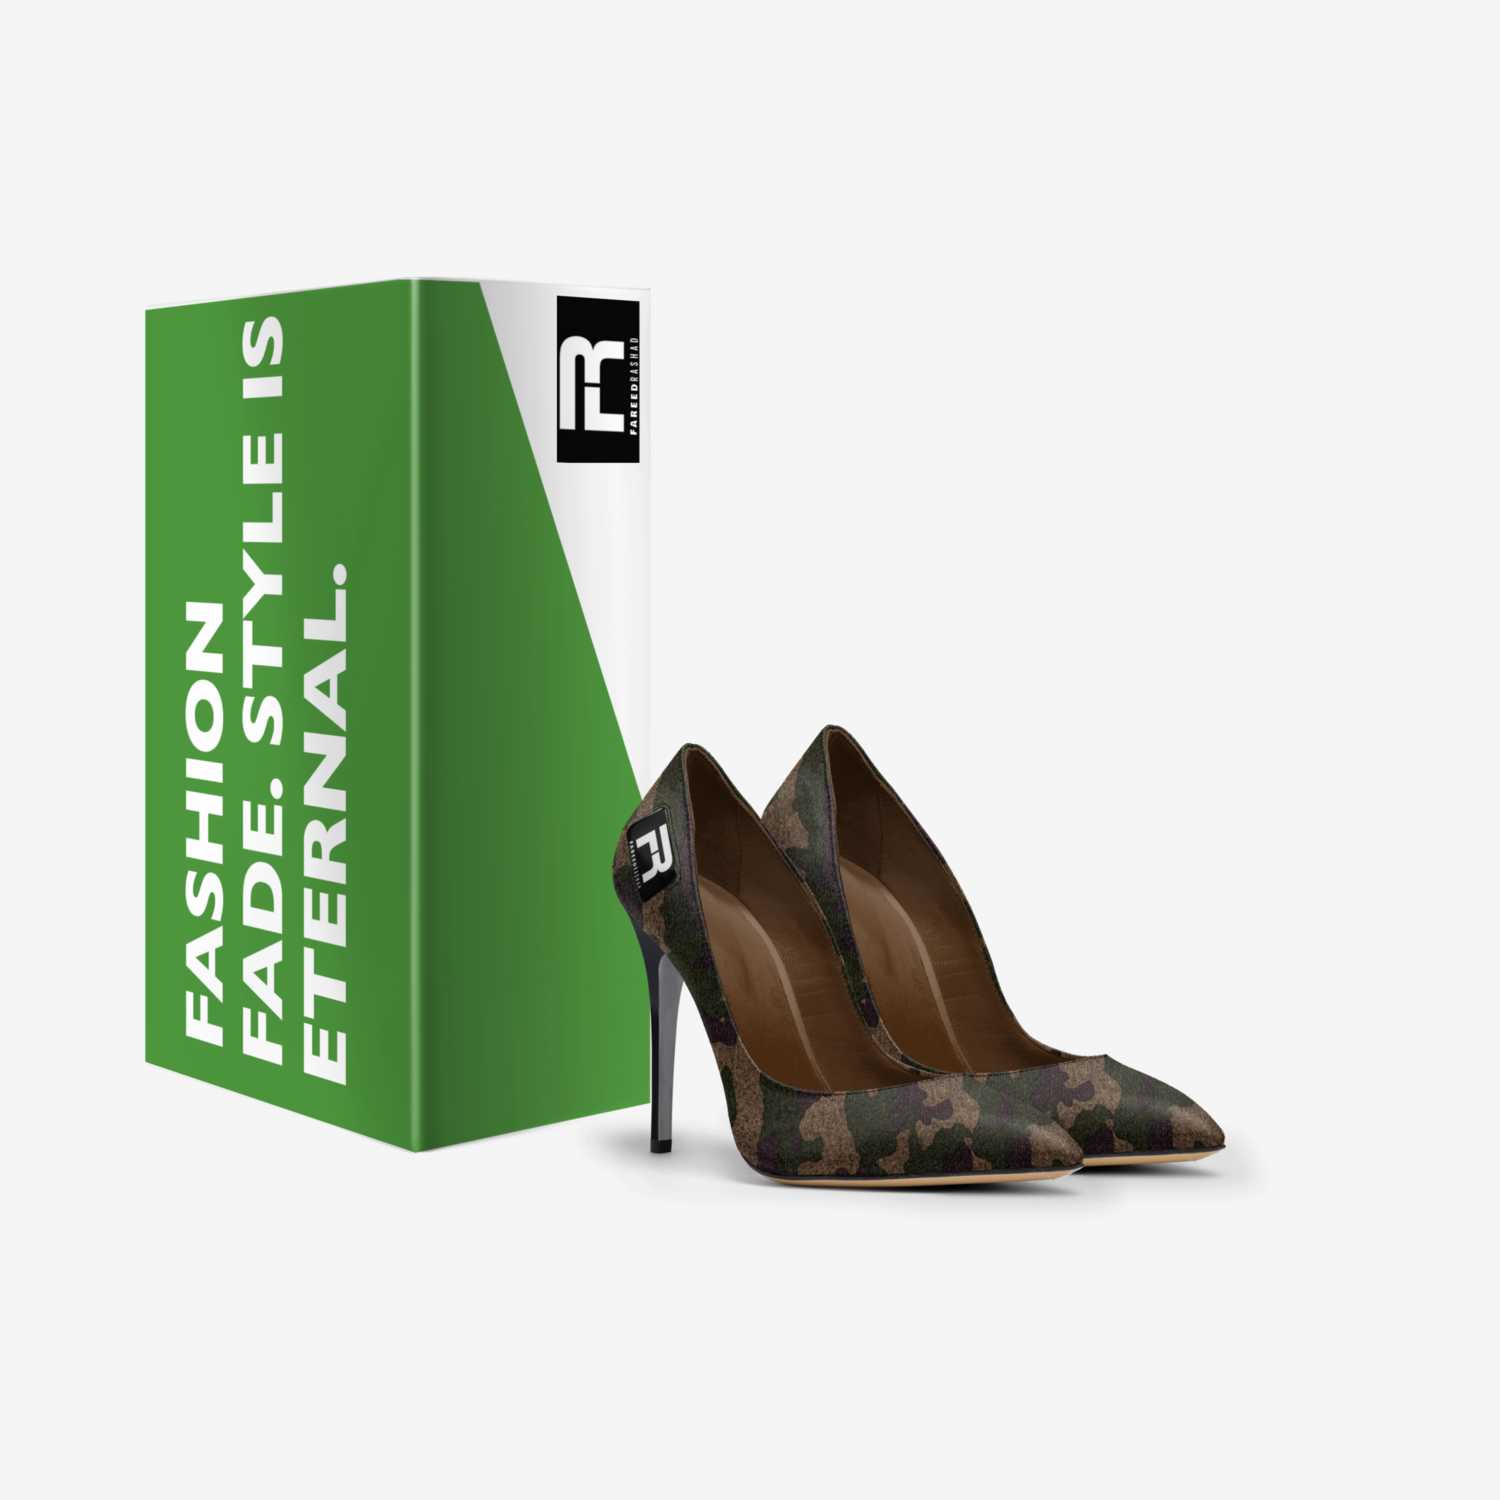 Jenni custom made in Italy shoes by Fareed Rashad | Box view